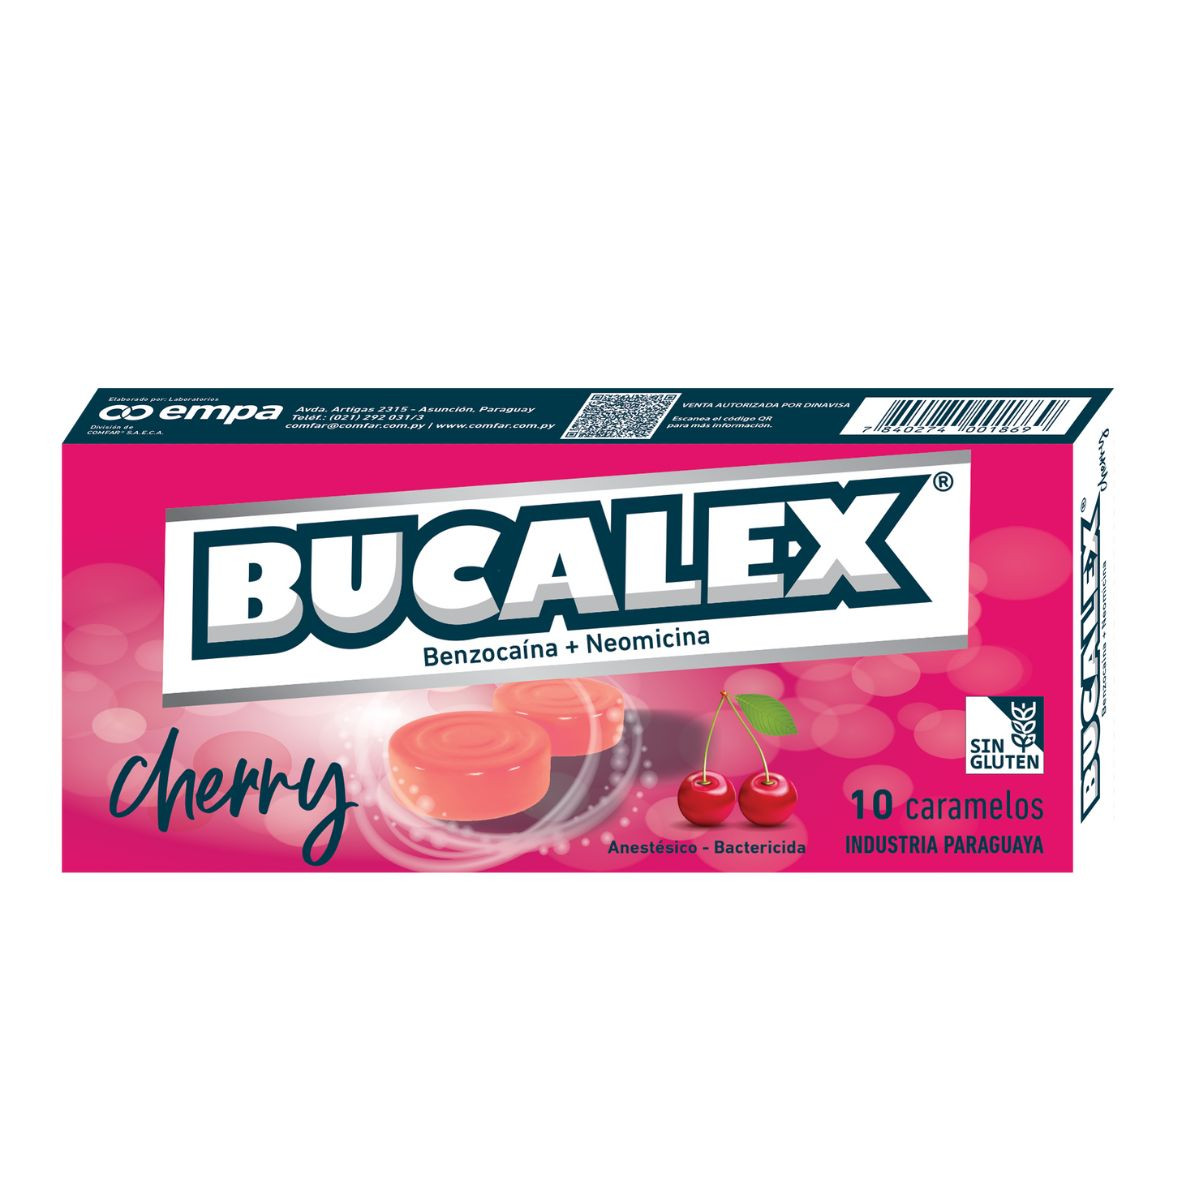 BUCALEX CARAMELO X 10 CHERRY